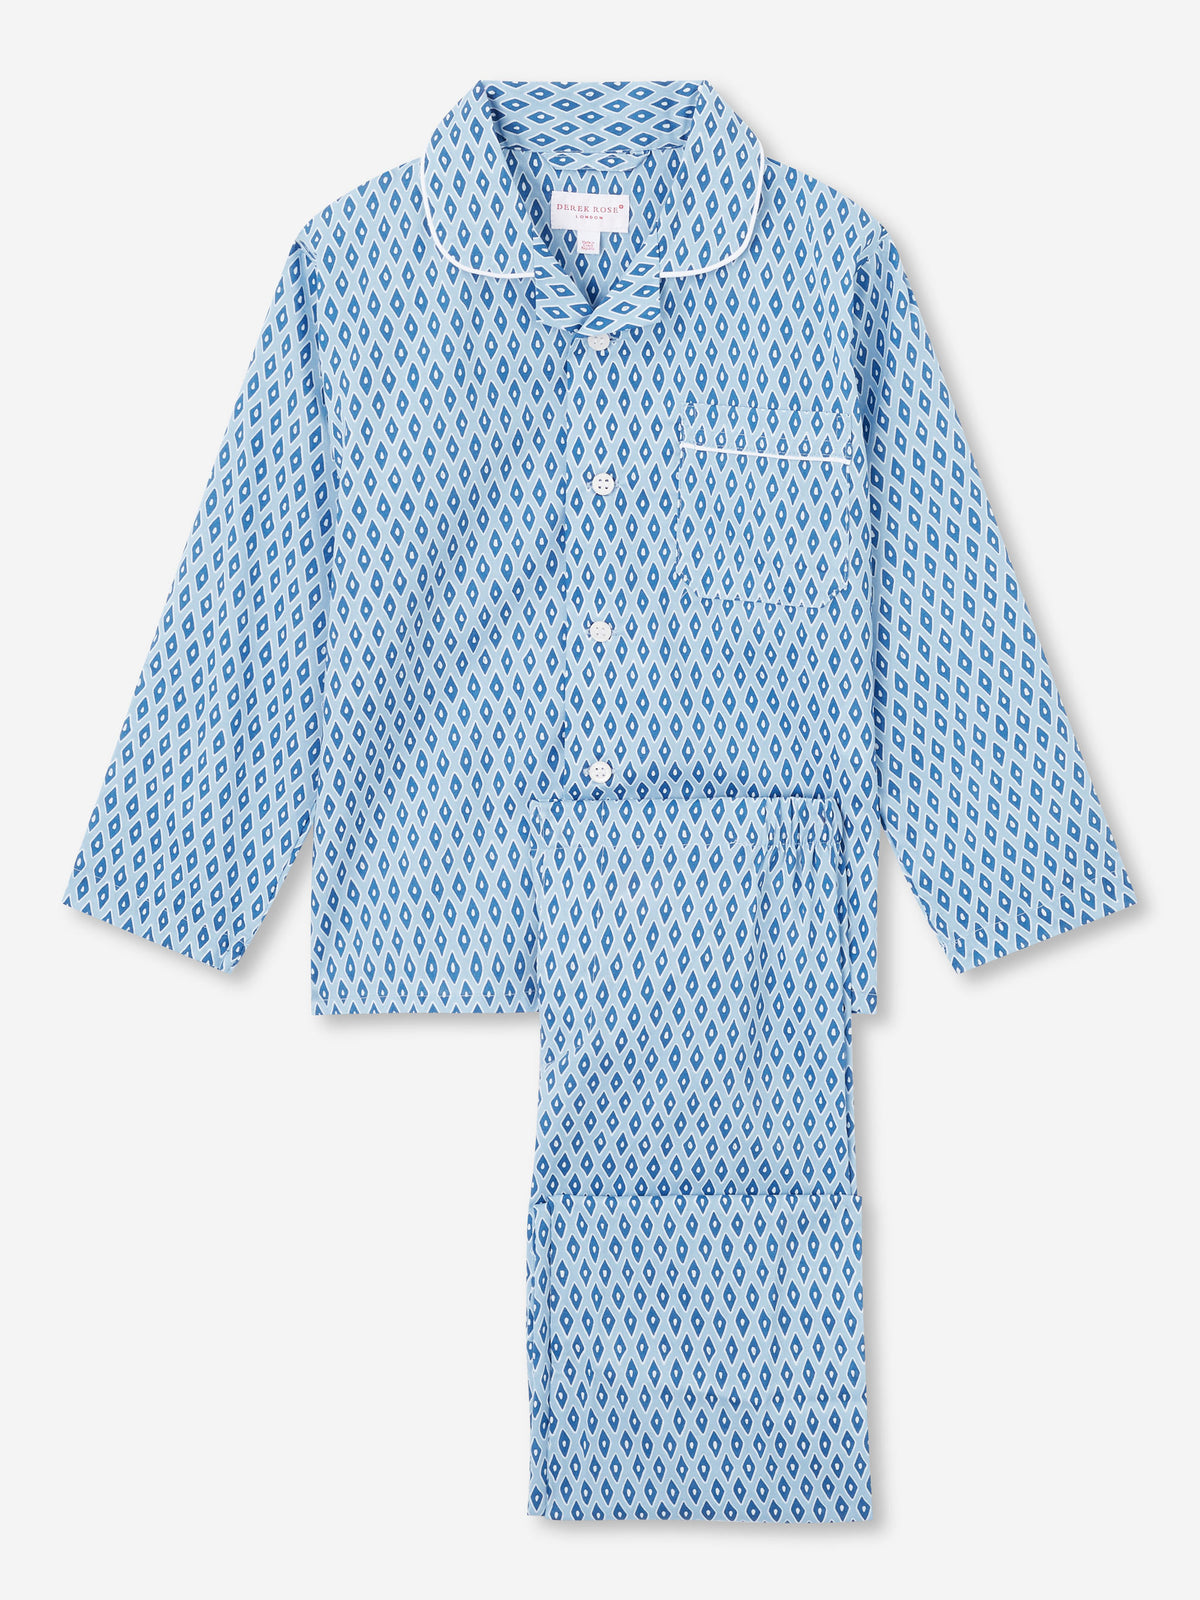 Kids' Pyjamas Nelson 87 Cotton Batiste Blue